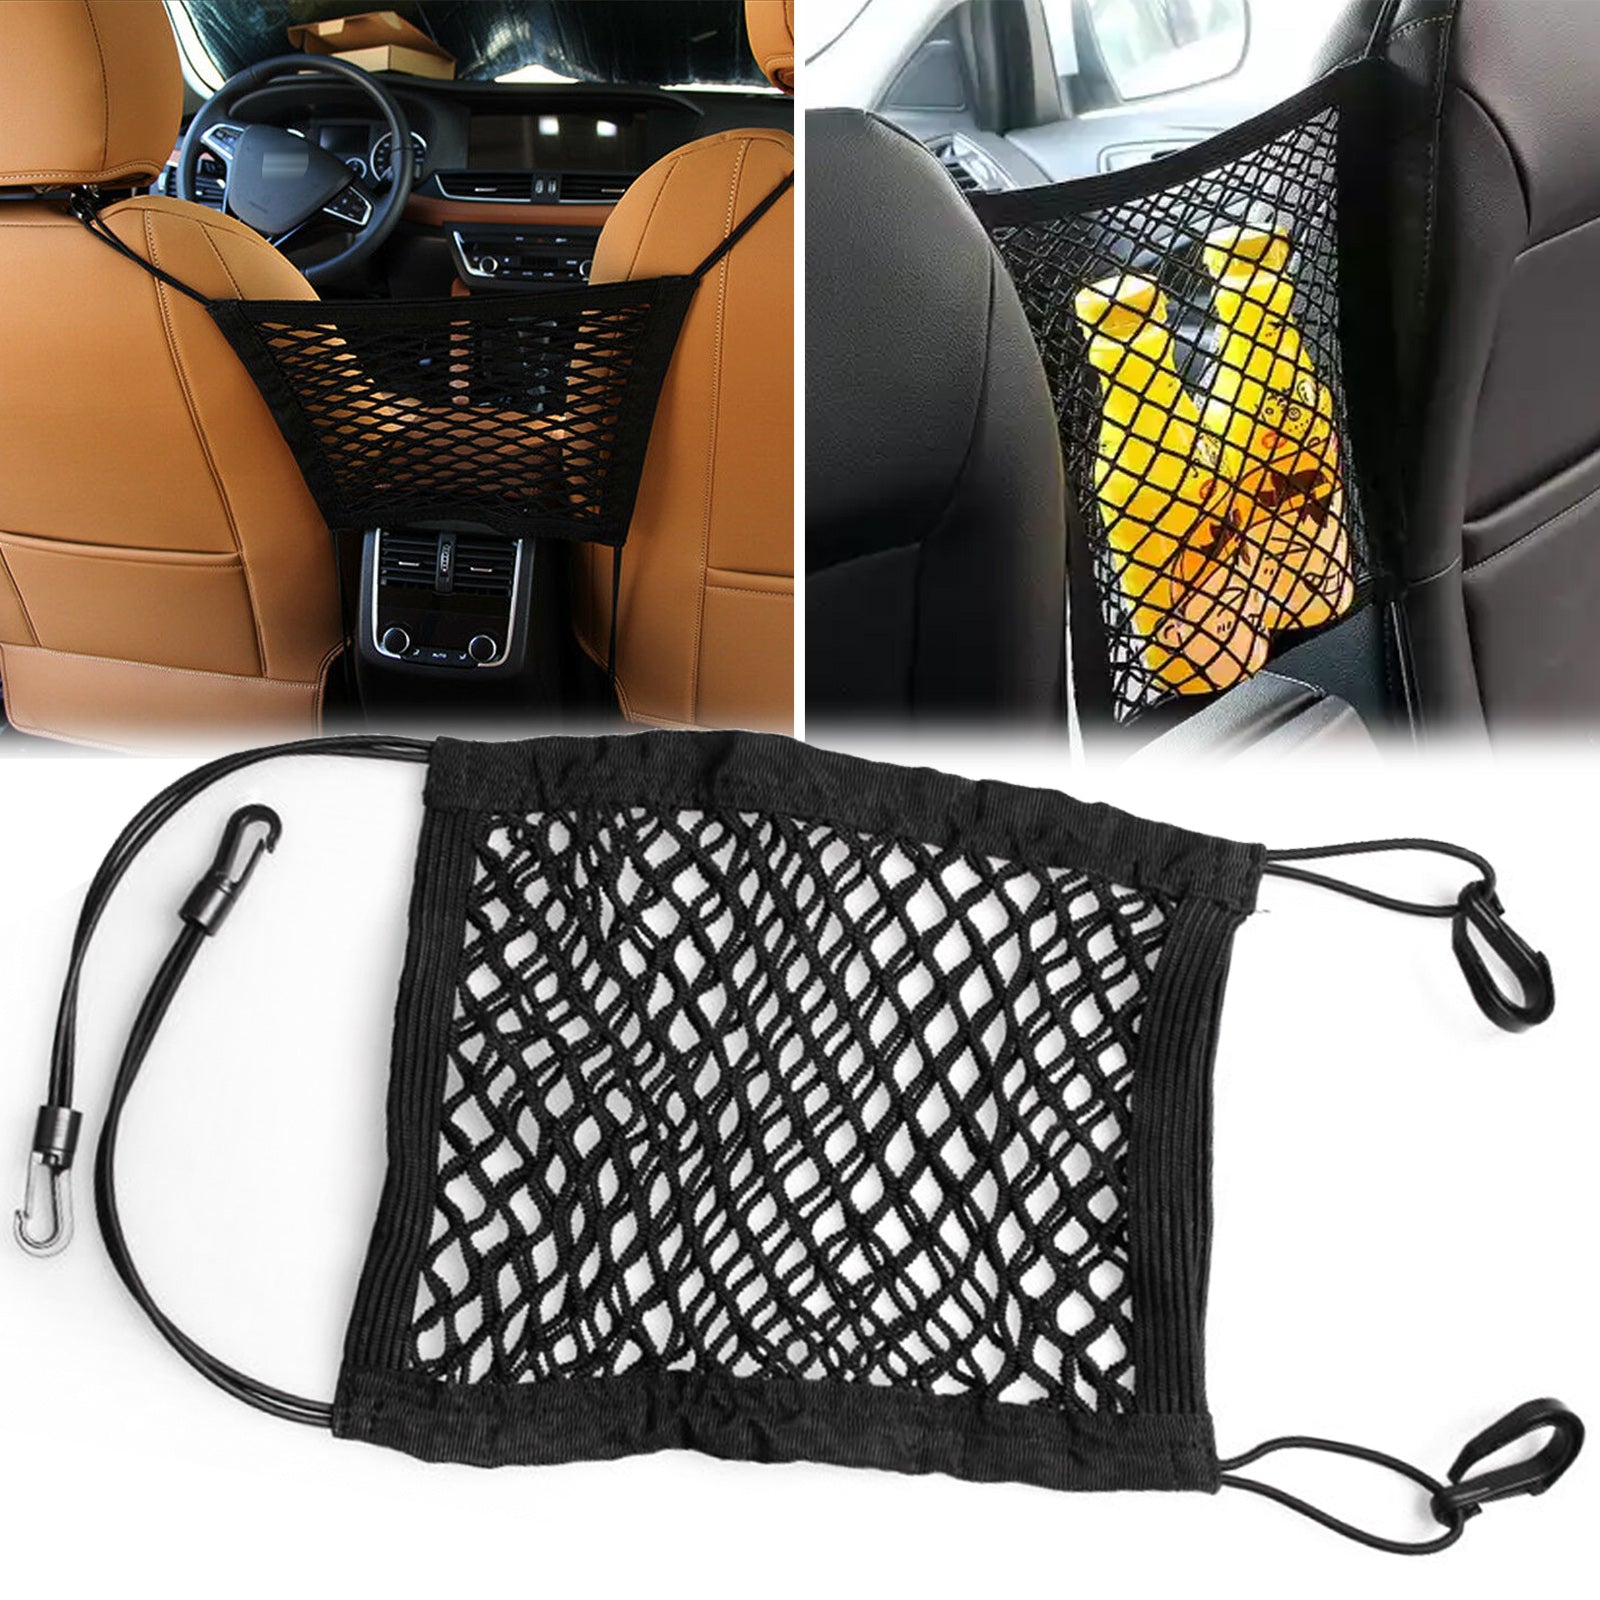 Car Organizer And Storage Purse Holder,seat Back Net Handbag Purse